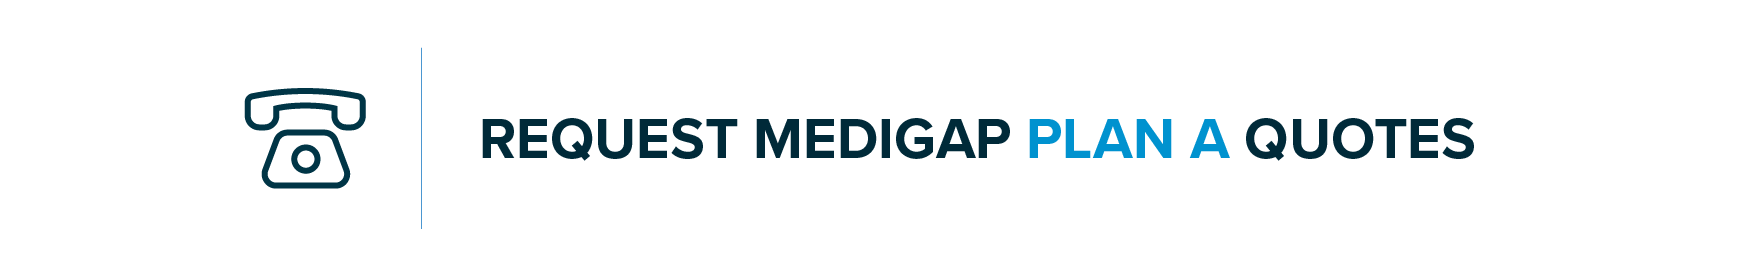 Medigap Plan A Quotes